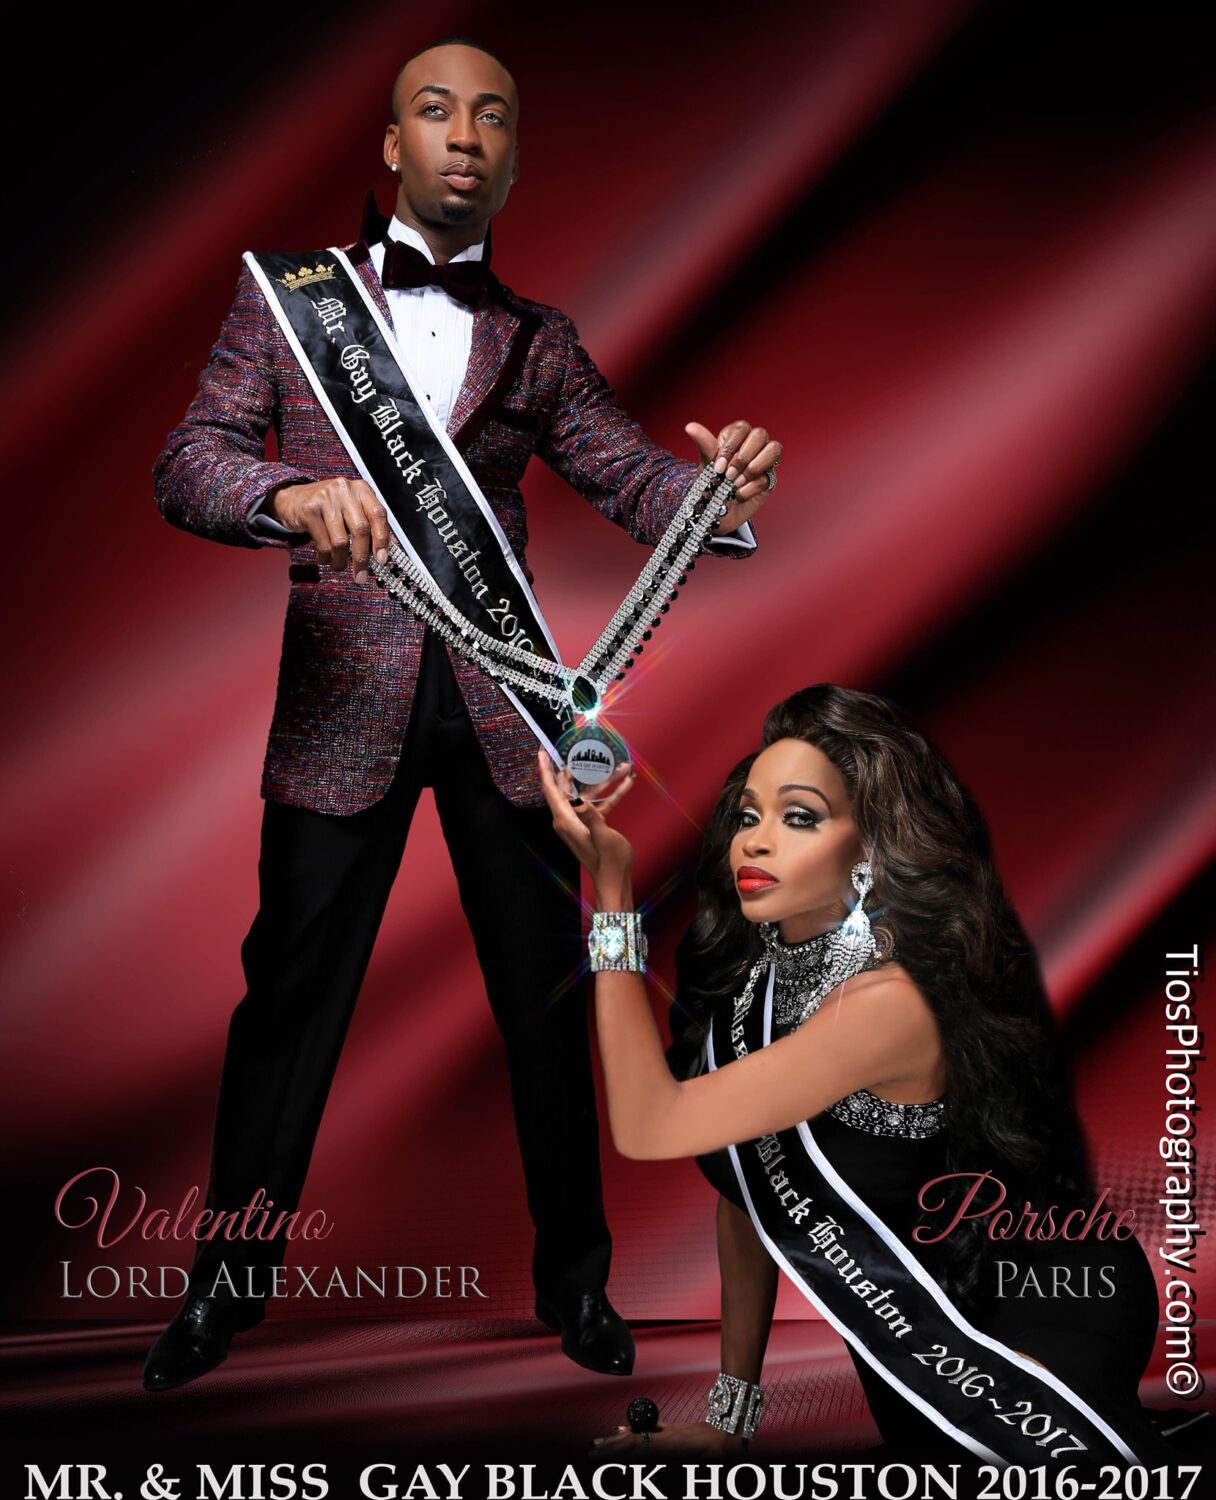 Valentino Lord Alexander (Mr. Gay Black Houston 2016) and Porsche Paris (Miss Gay Black Houston 2016) | Photo by Tios Photography